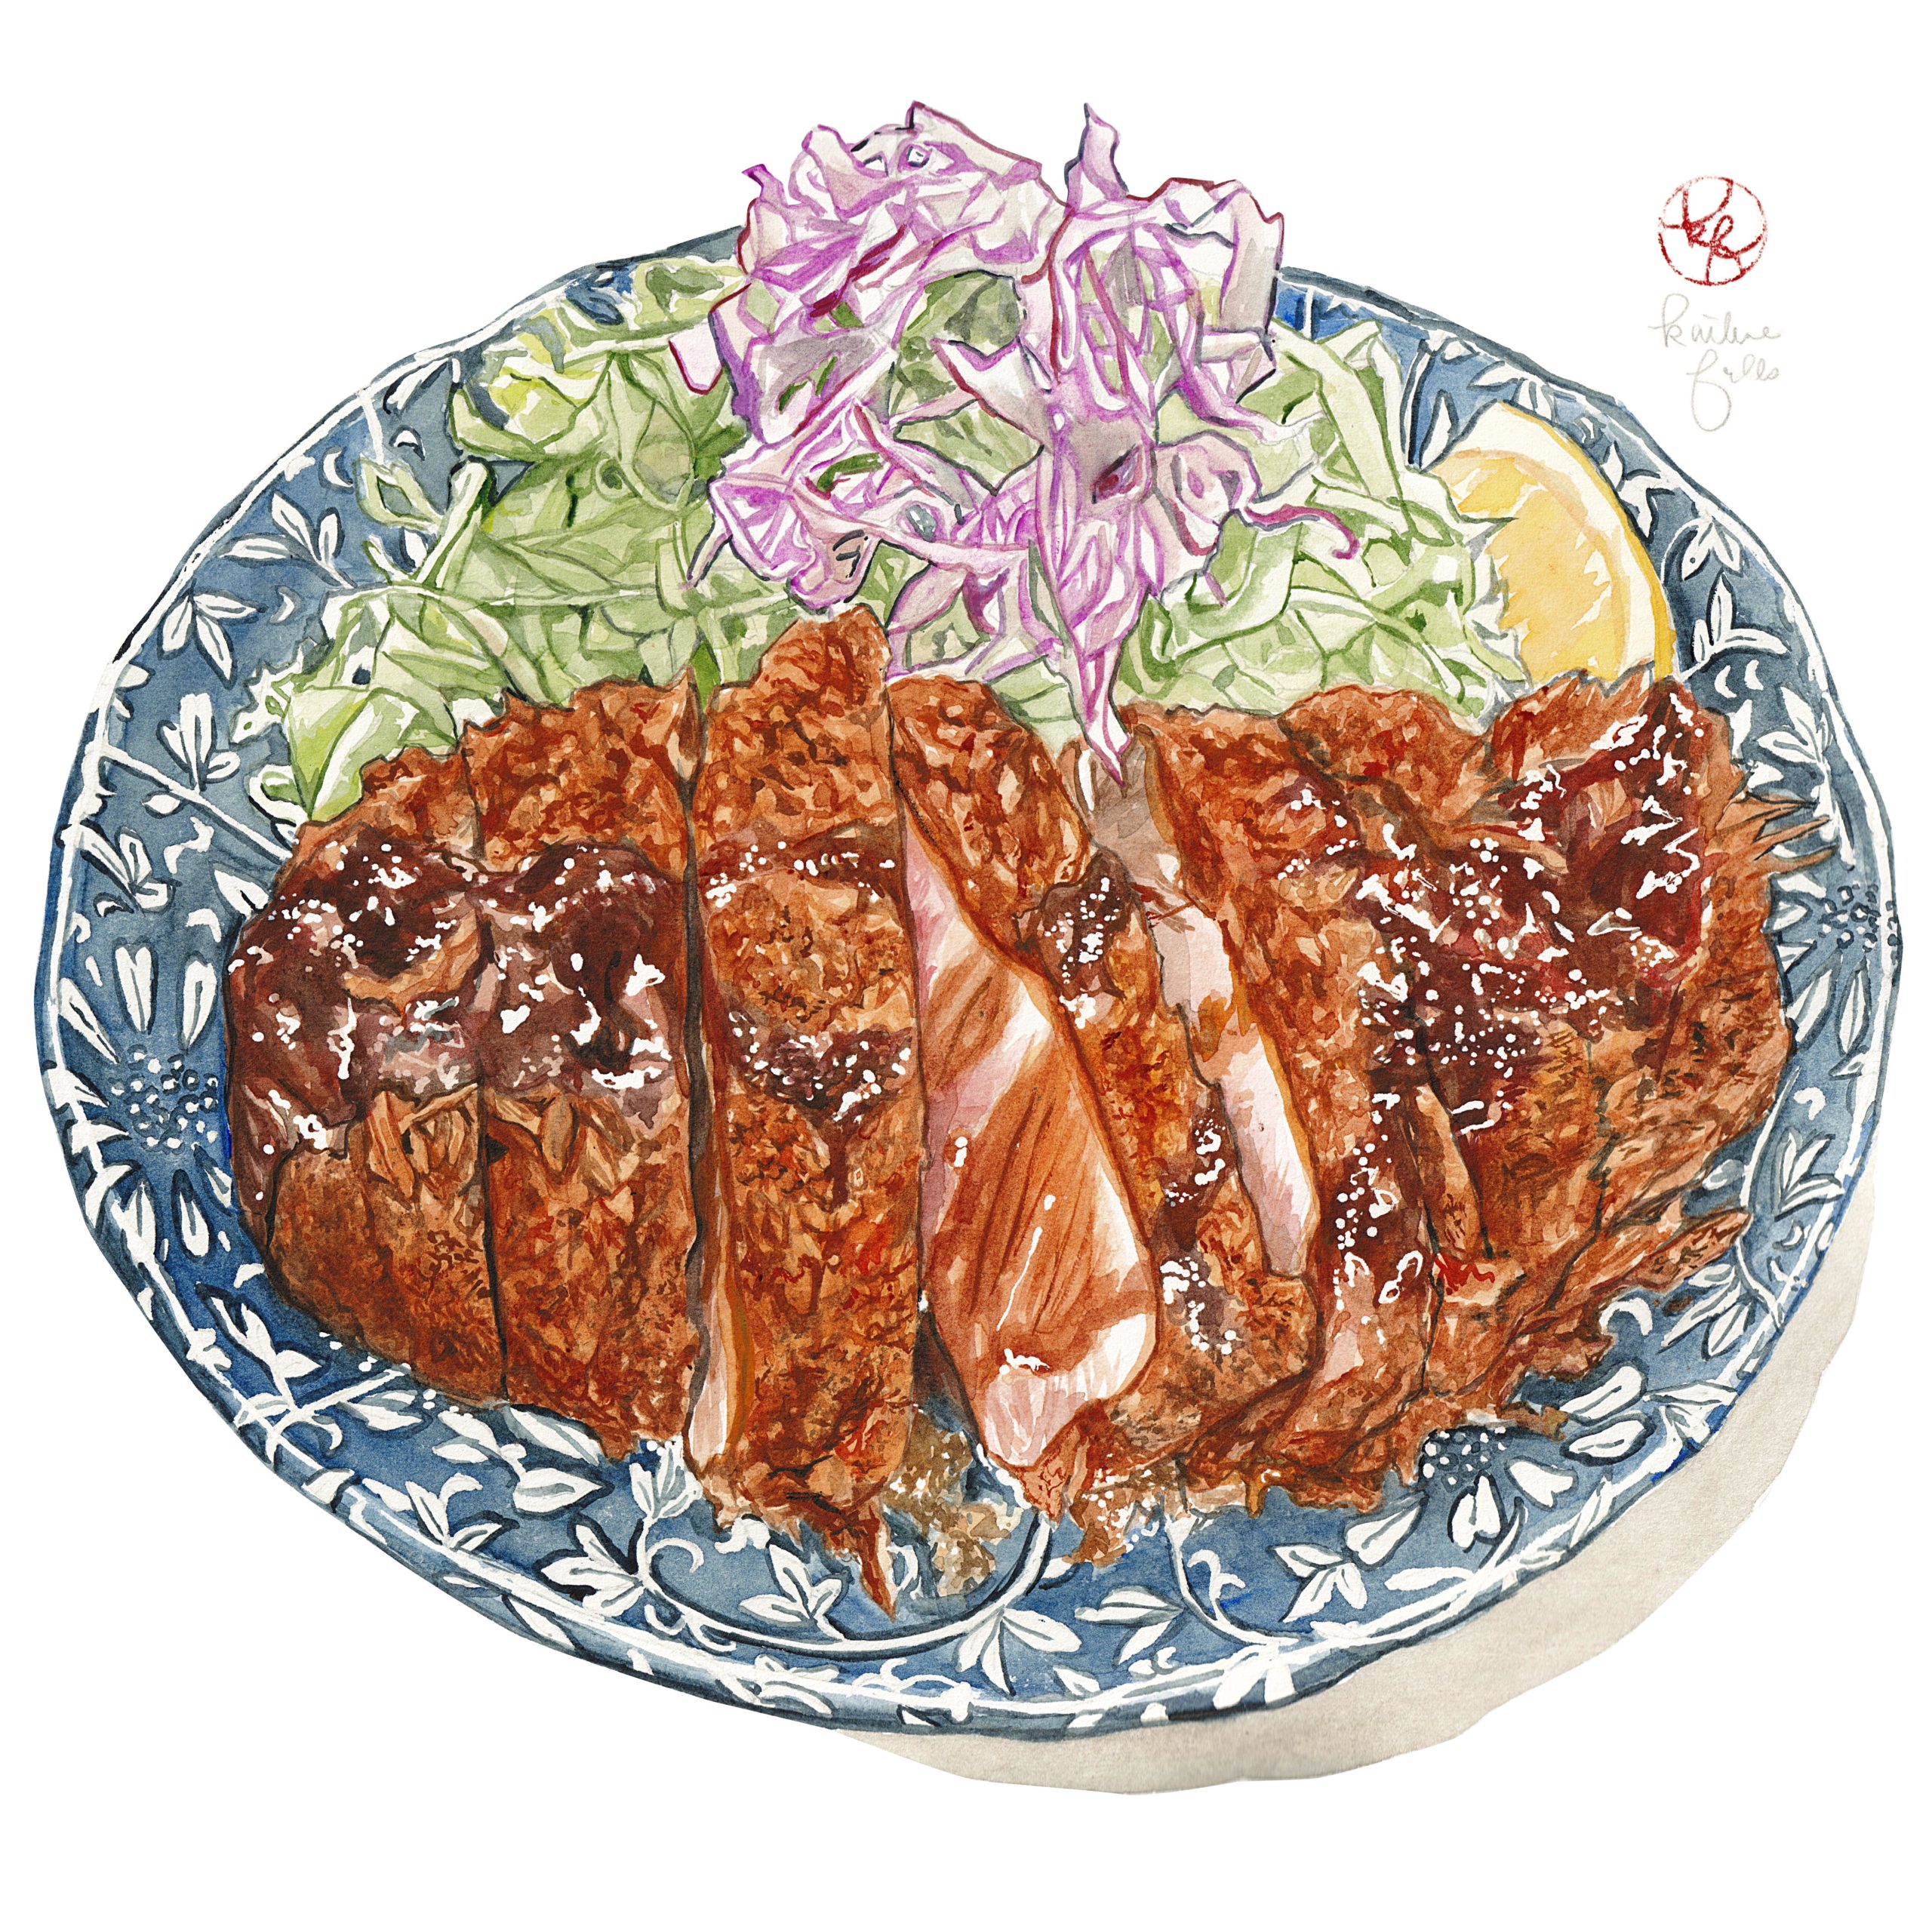 I painted the Tonkatsu (pork cutlet) I ate at “Tonkatsu Aoki” in Kamata ...